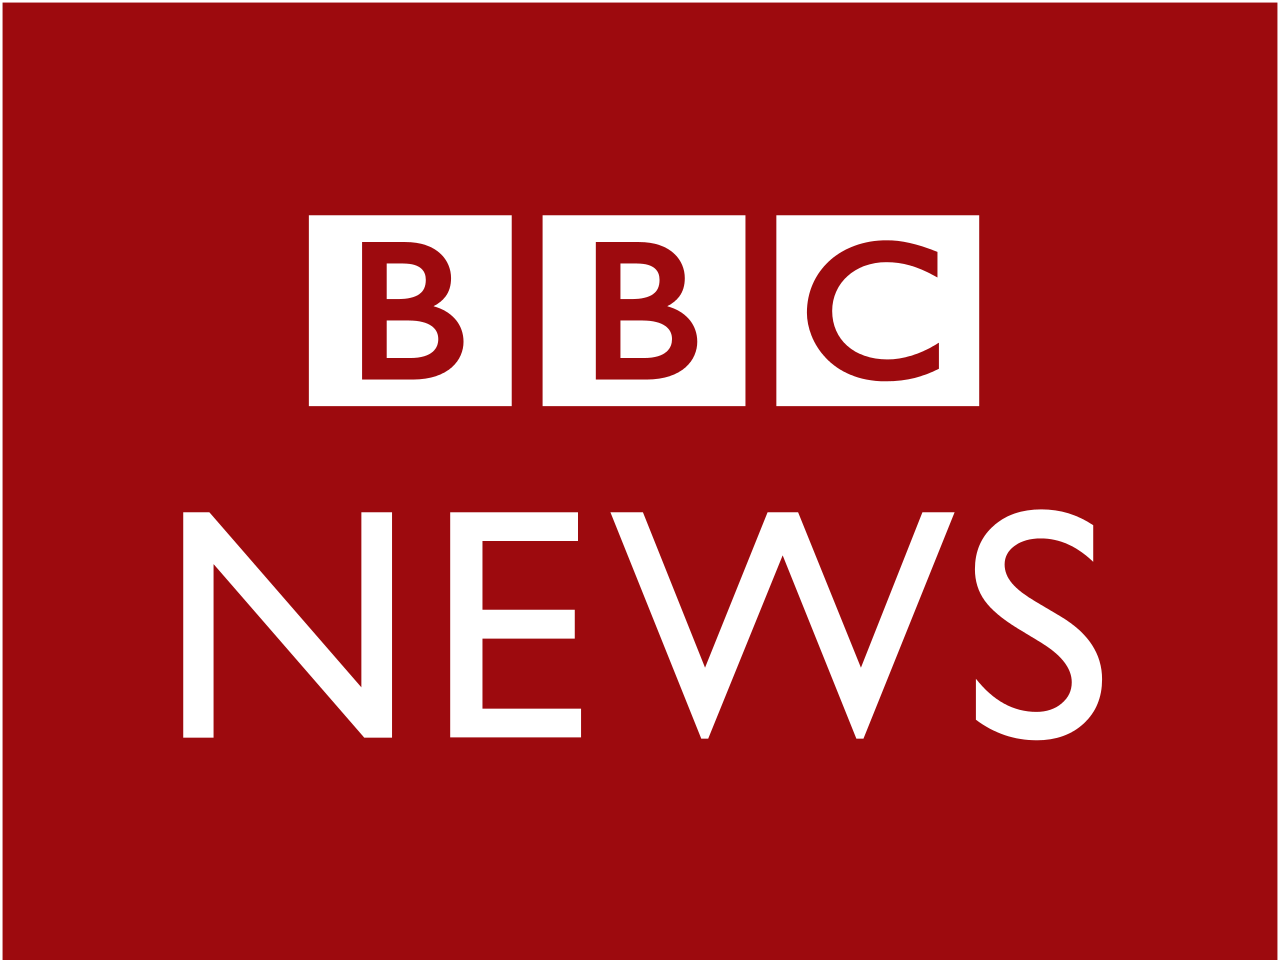 BBC NEWS JANUARY 2016